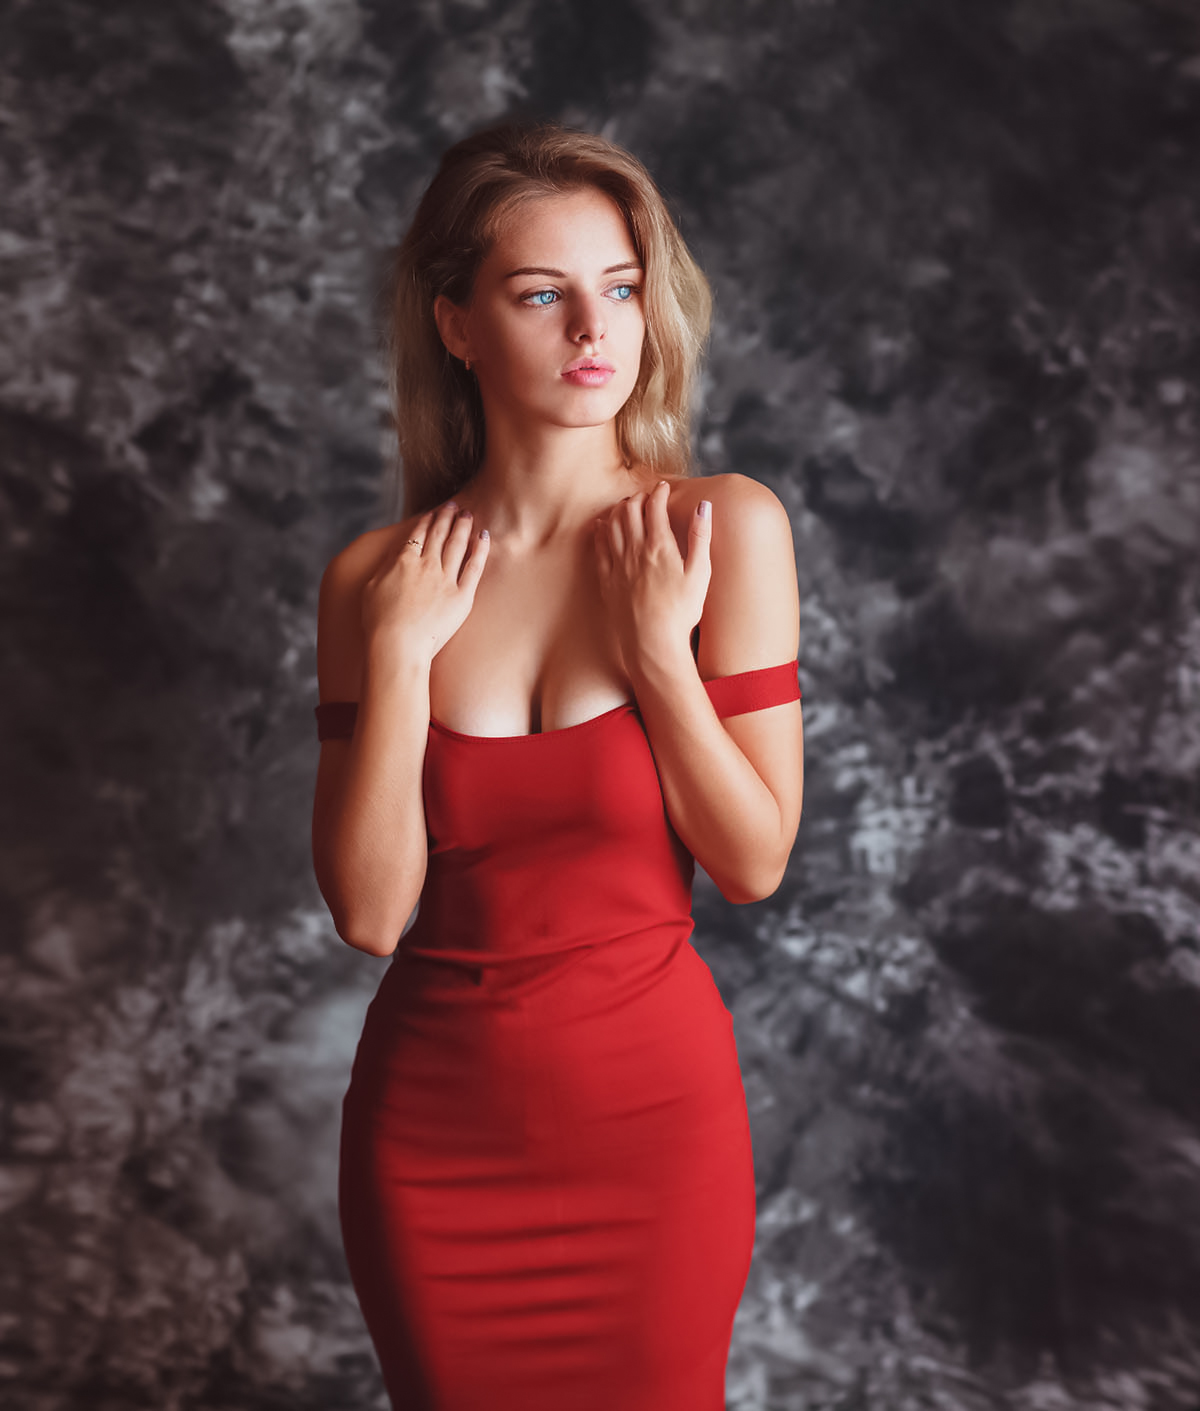 Aleksei Gilev Women Blonde Looking Away Blue Eyes Dress Red Clothing Bare Shoulders Simple Backgroun 1200x1411